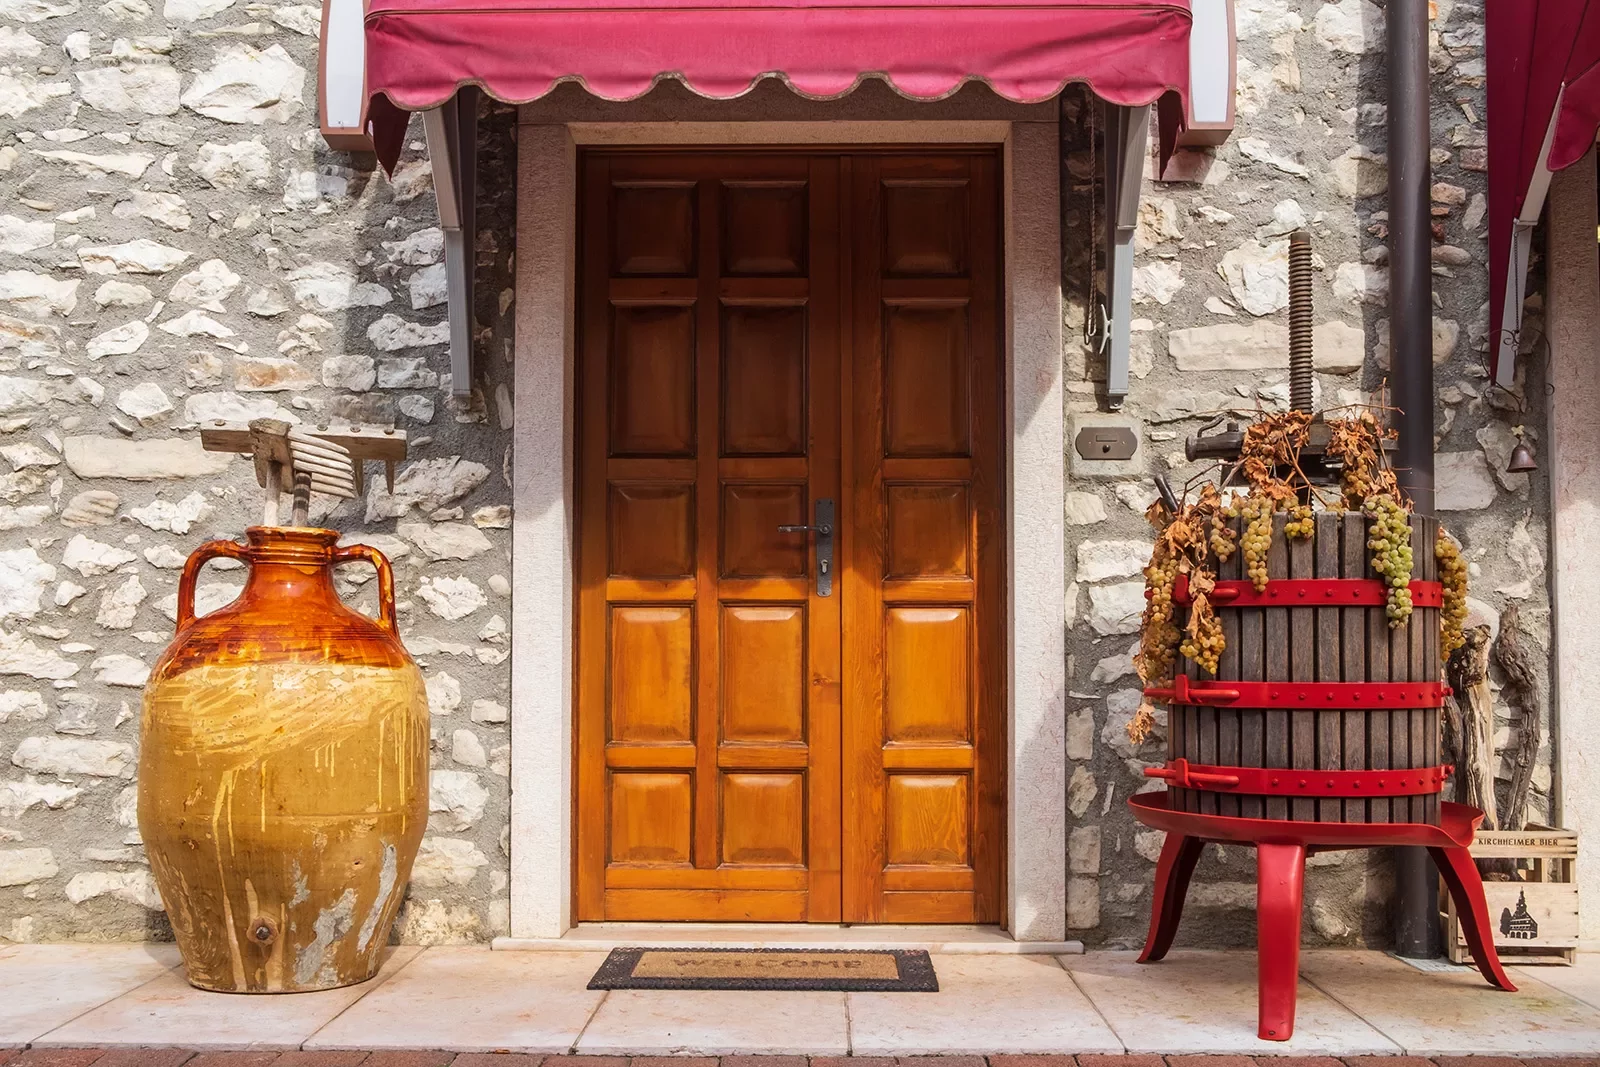 Stone storefront, large ceramic vase, wine grape crusher, wood door.